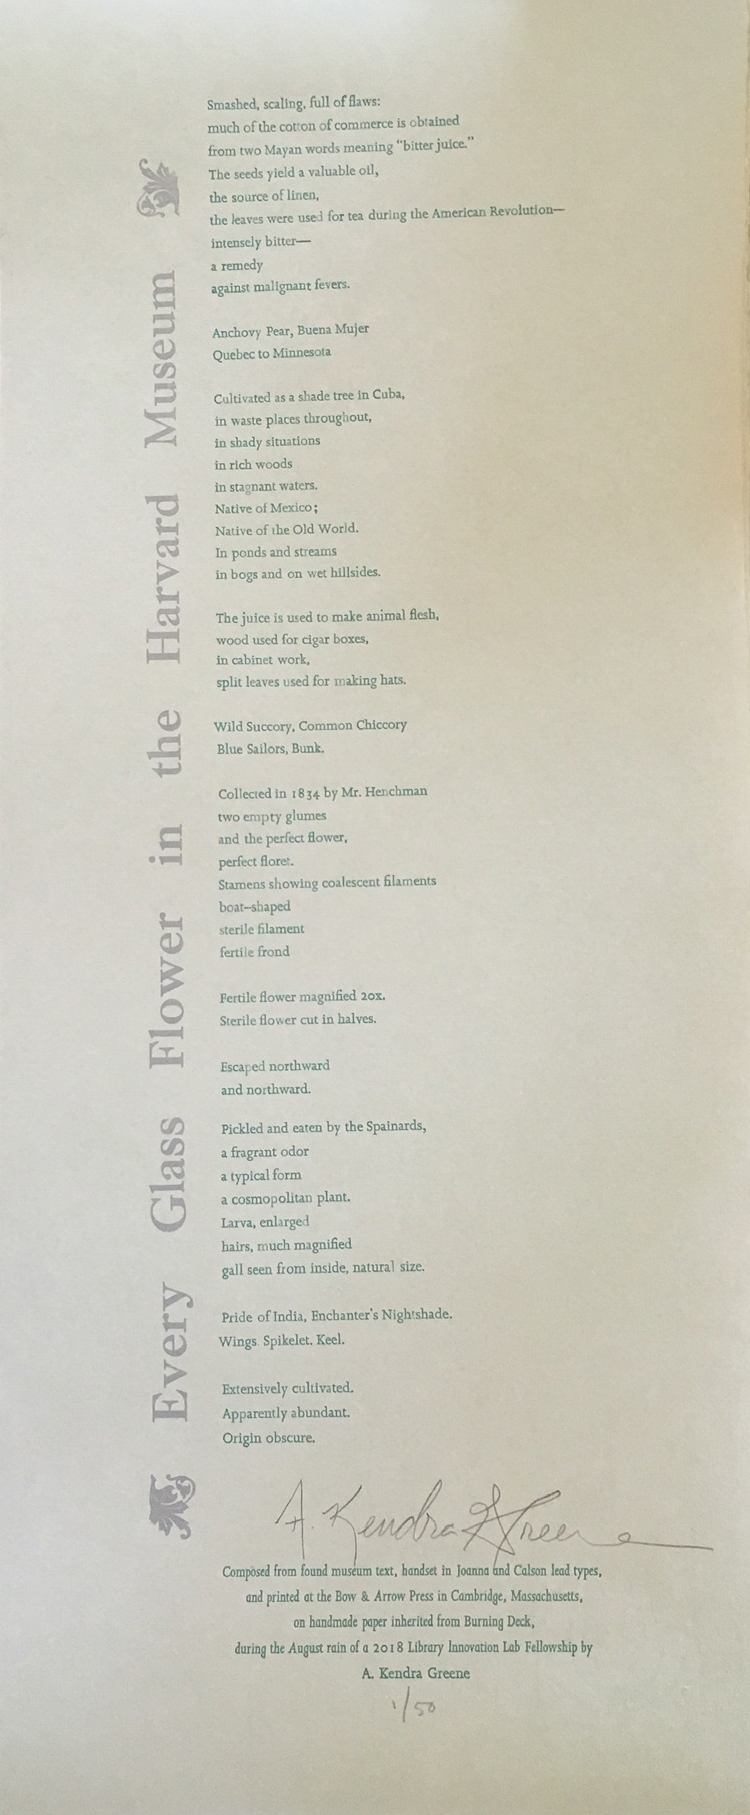 Every Glass Flower in the Harvard Museum Broadside by Kendra Greene of Greene Ink Press